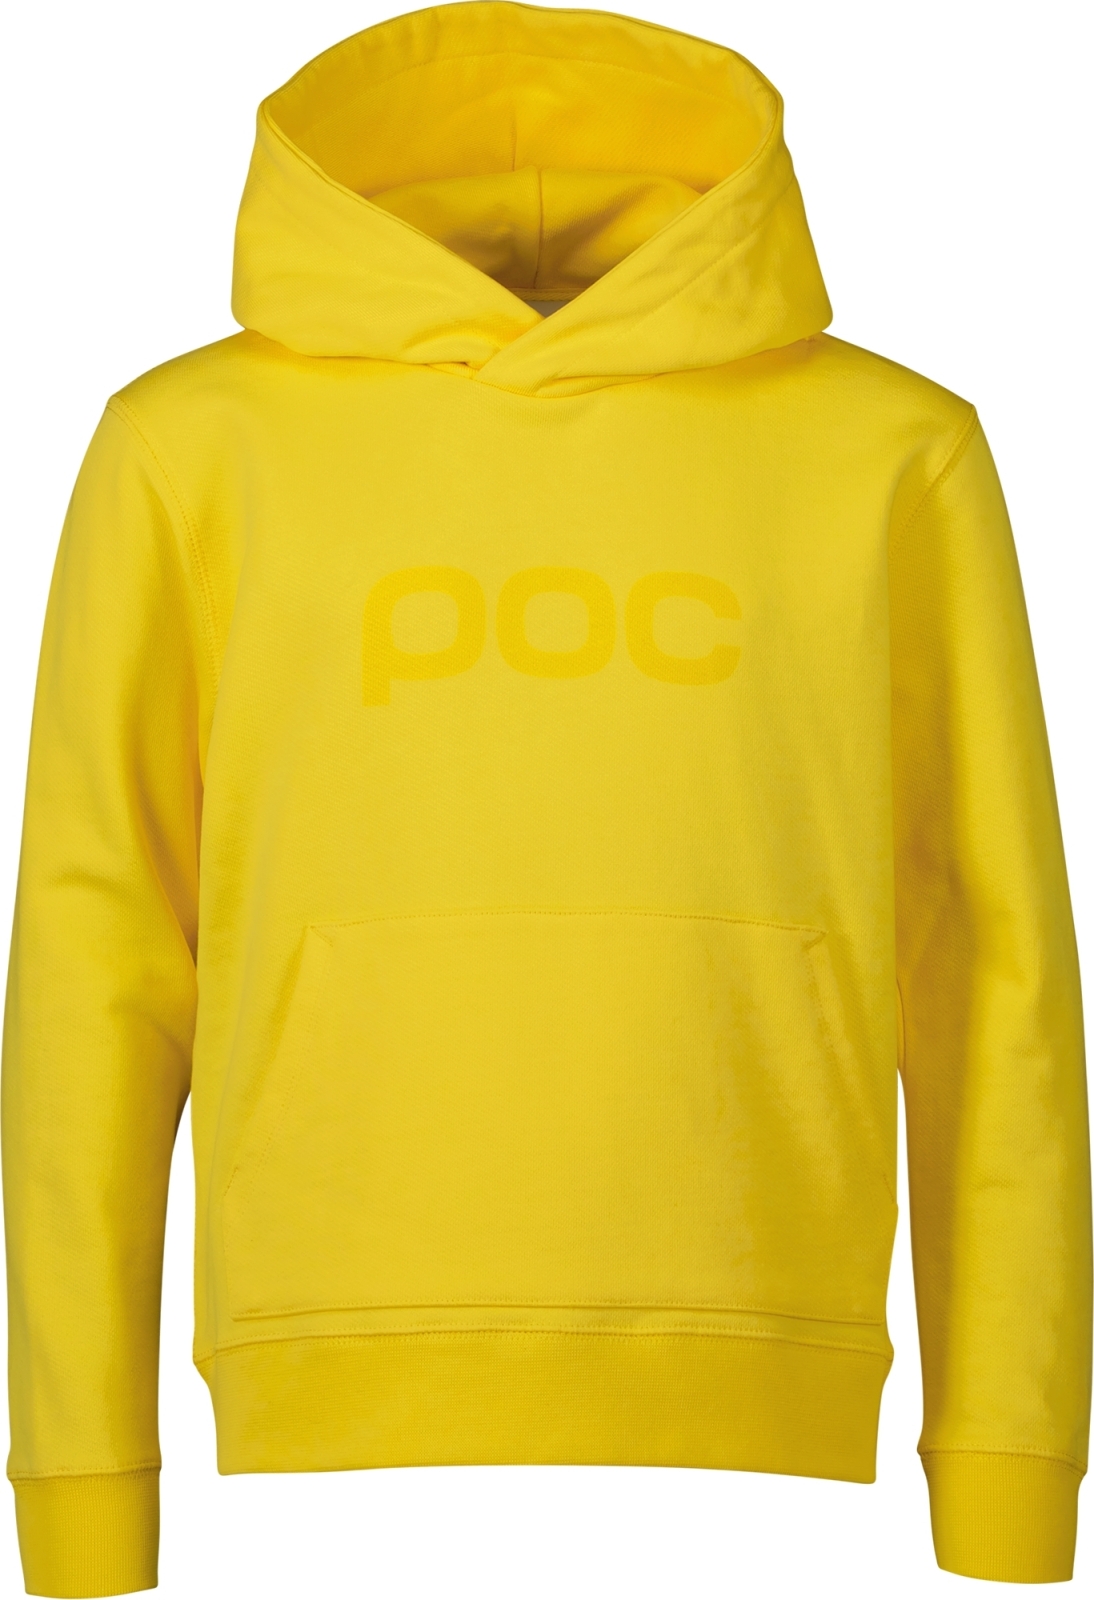 POC POC Hood Jr - Aventurine Yellow 160